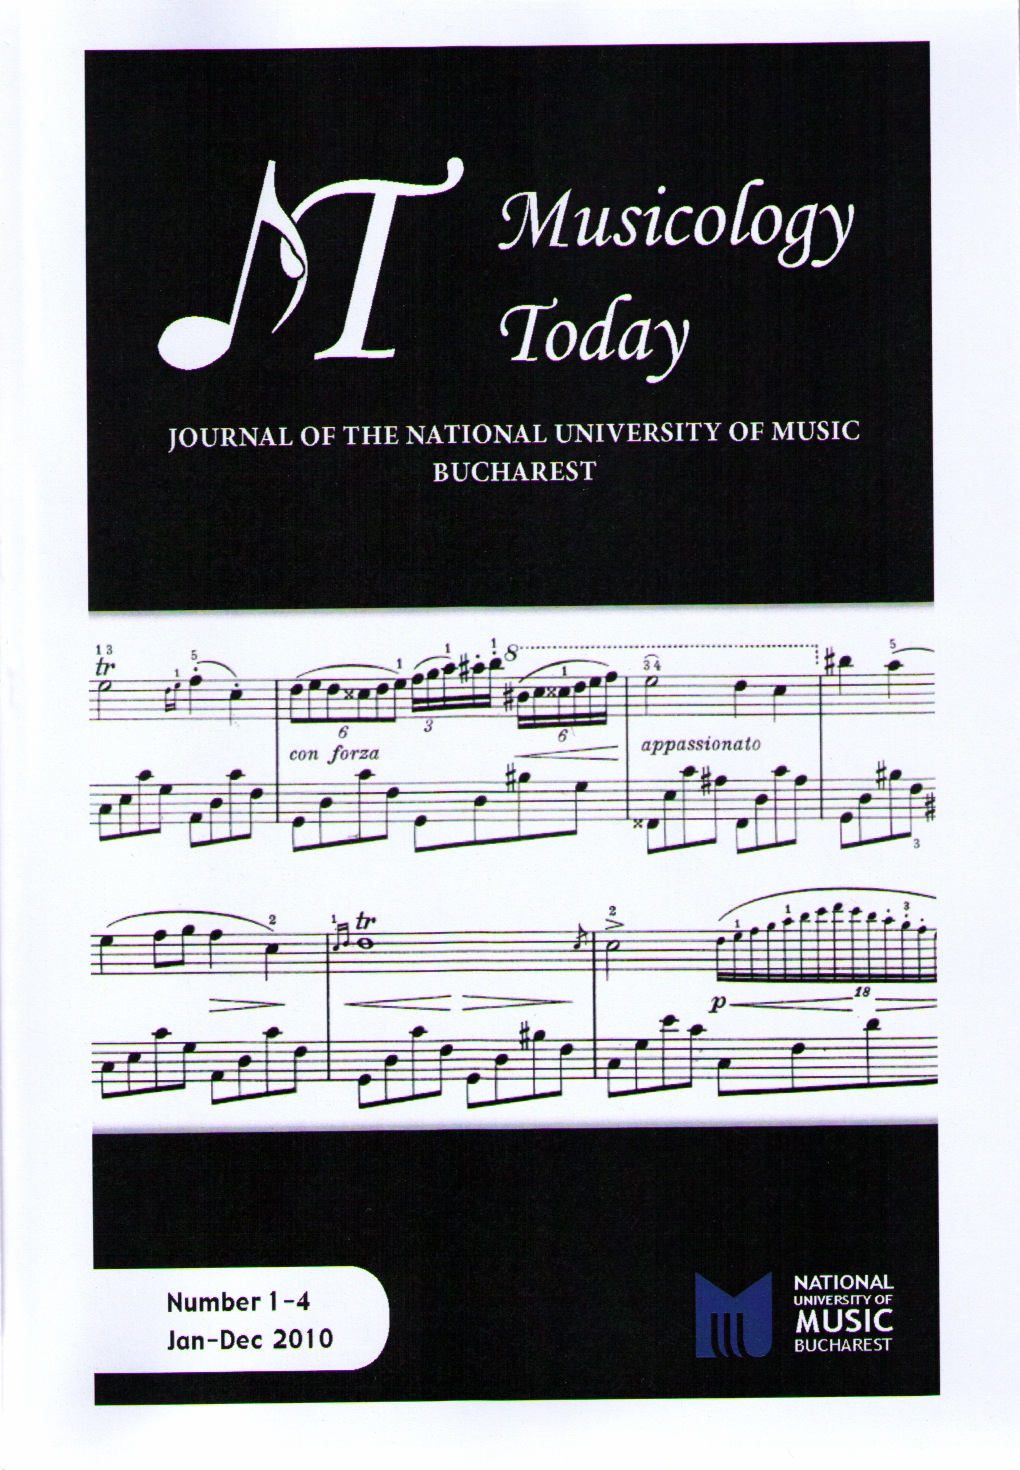 Musicians Celebrated in 2009: Paul Constantinescu, Joseph Haydn, Felix Mendelssohn-Bartholdy